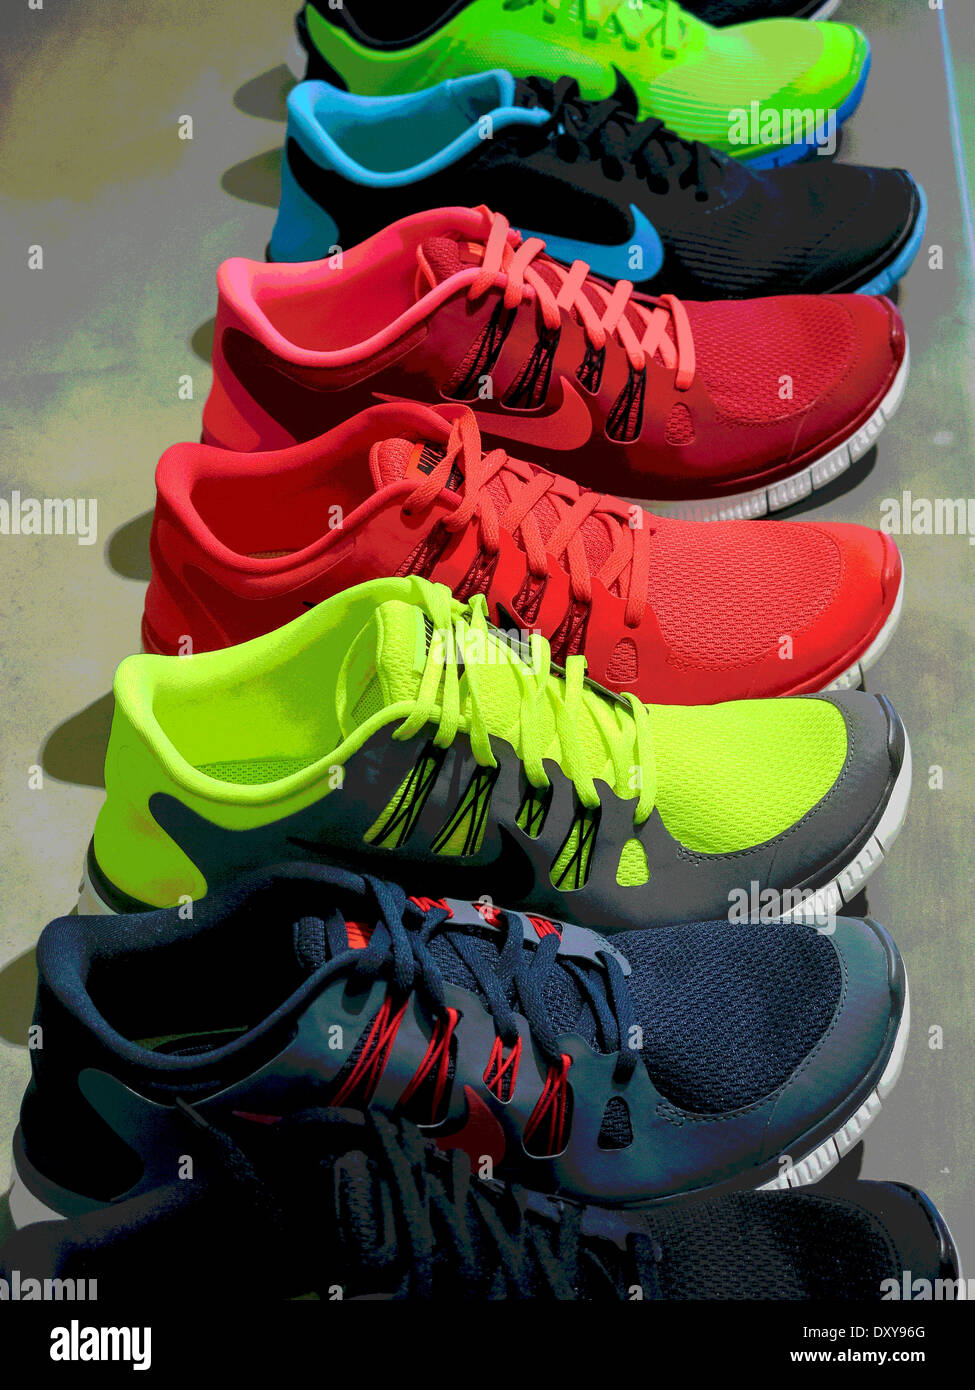 Nike Athletic Shoes with Swoosh Logo Stock Photo - Alamy